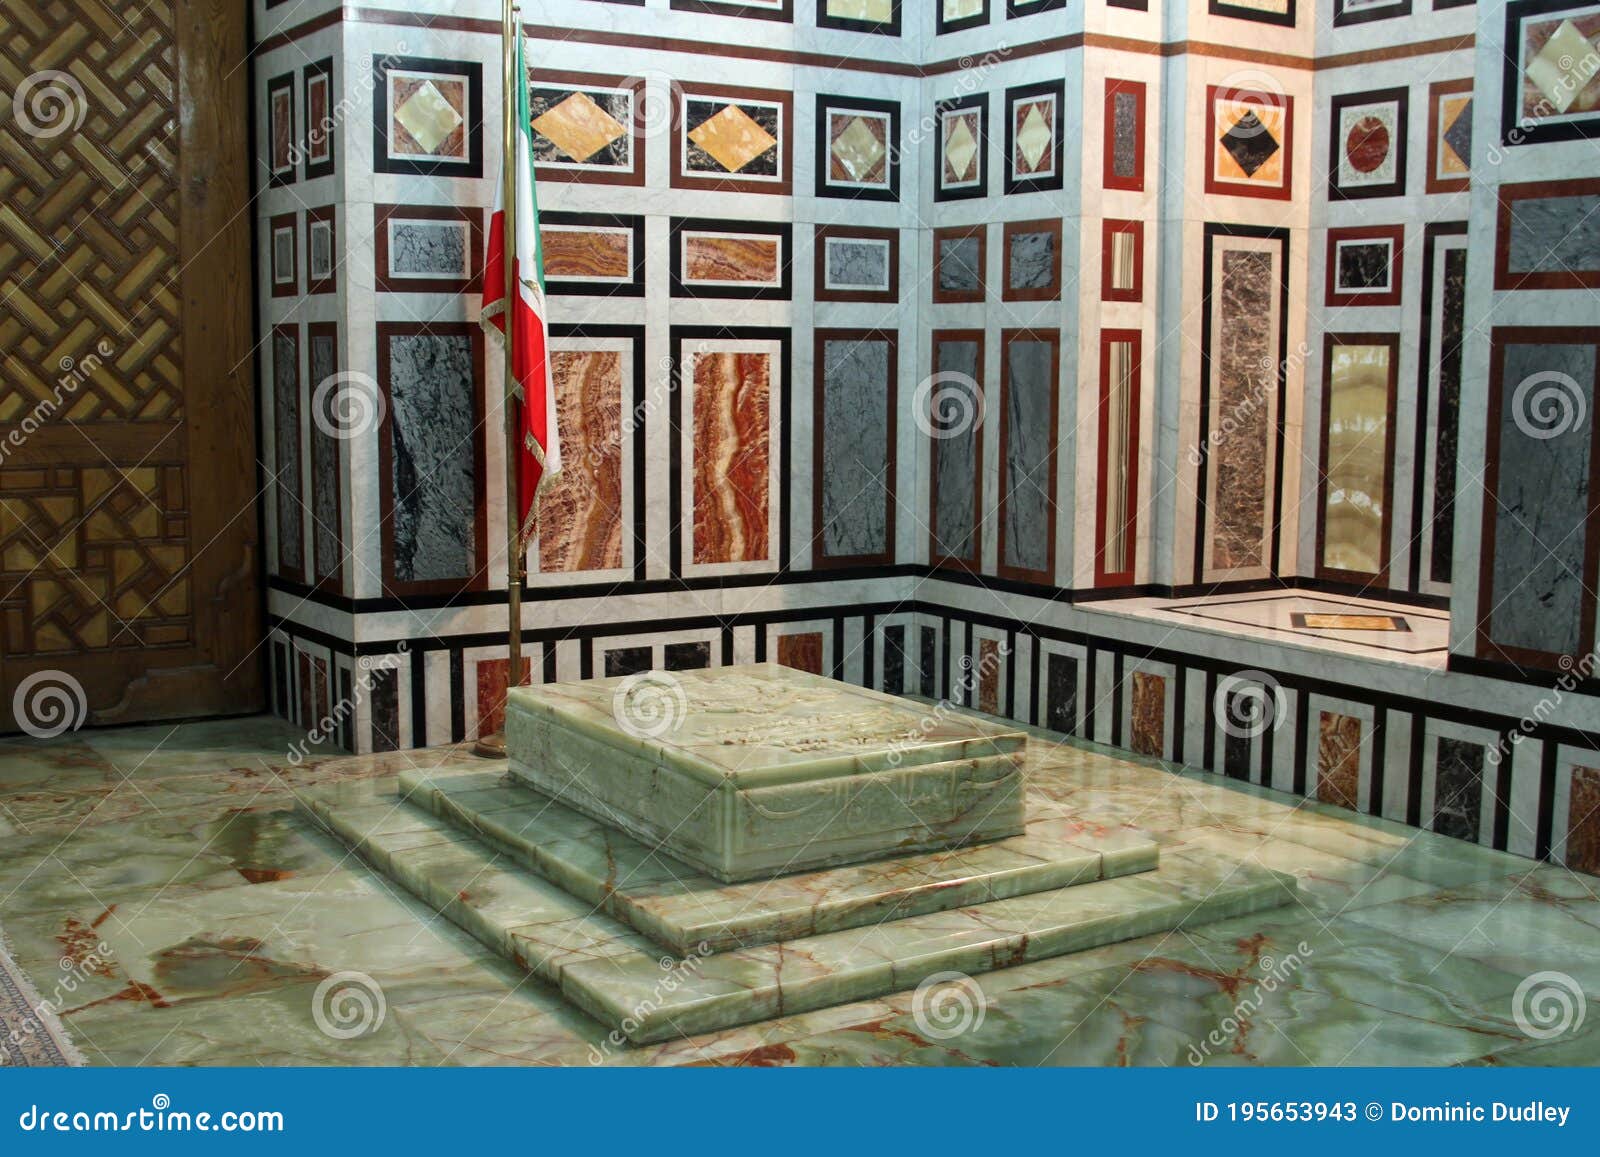 The Tomb Of Mohammad Reza Shah Pahlavi, The Last Shah Of Iran Editorial